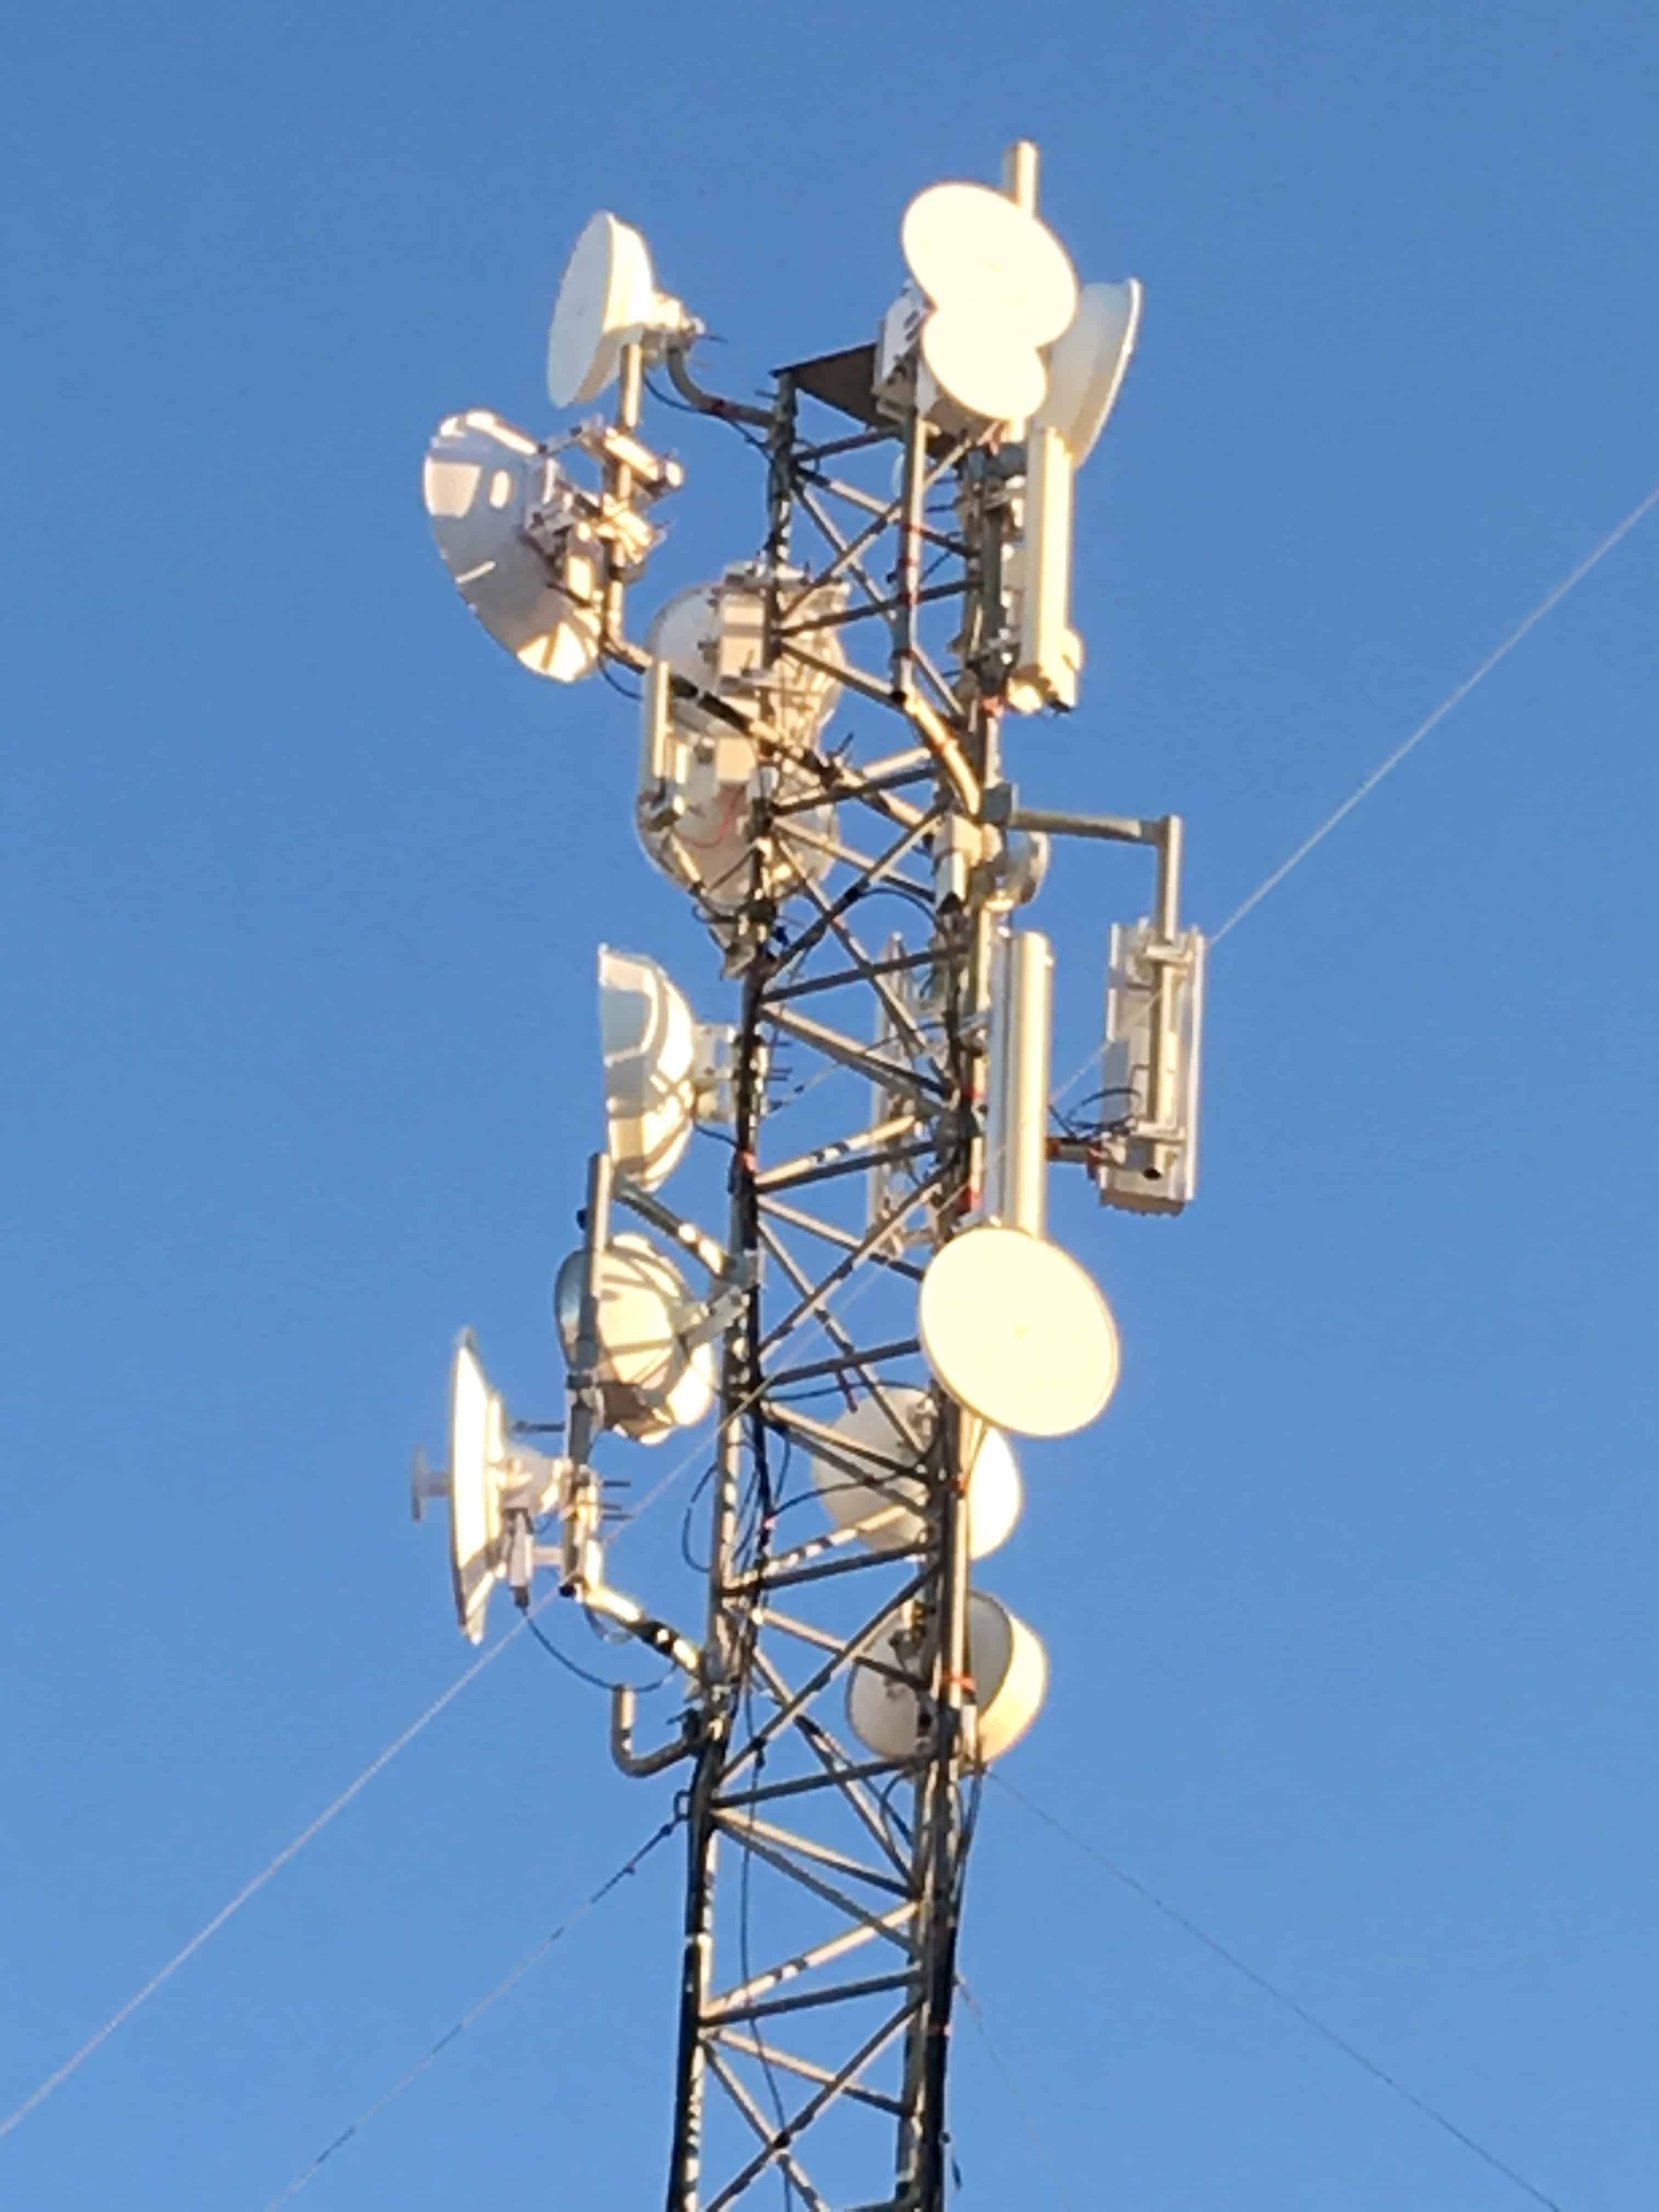 Fixed wireless broadband rural areas